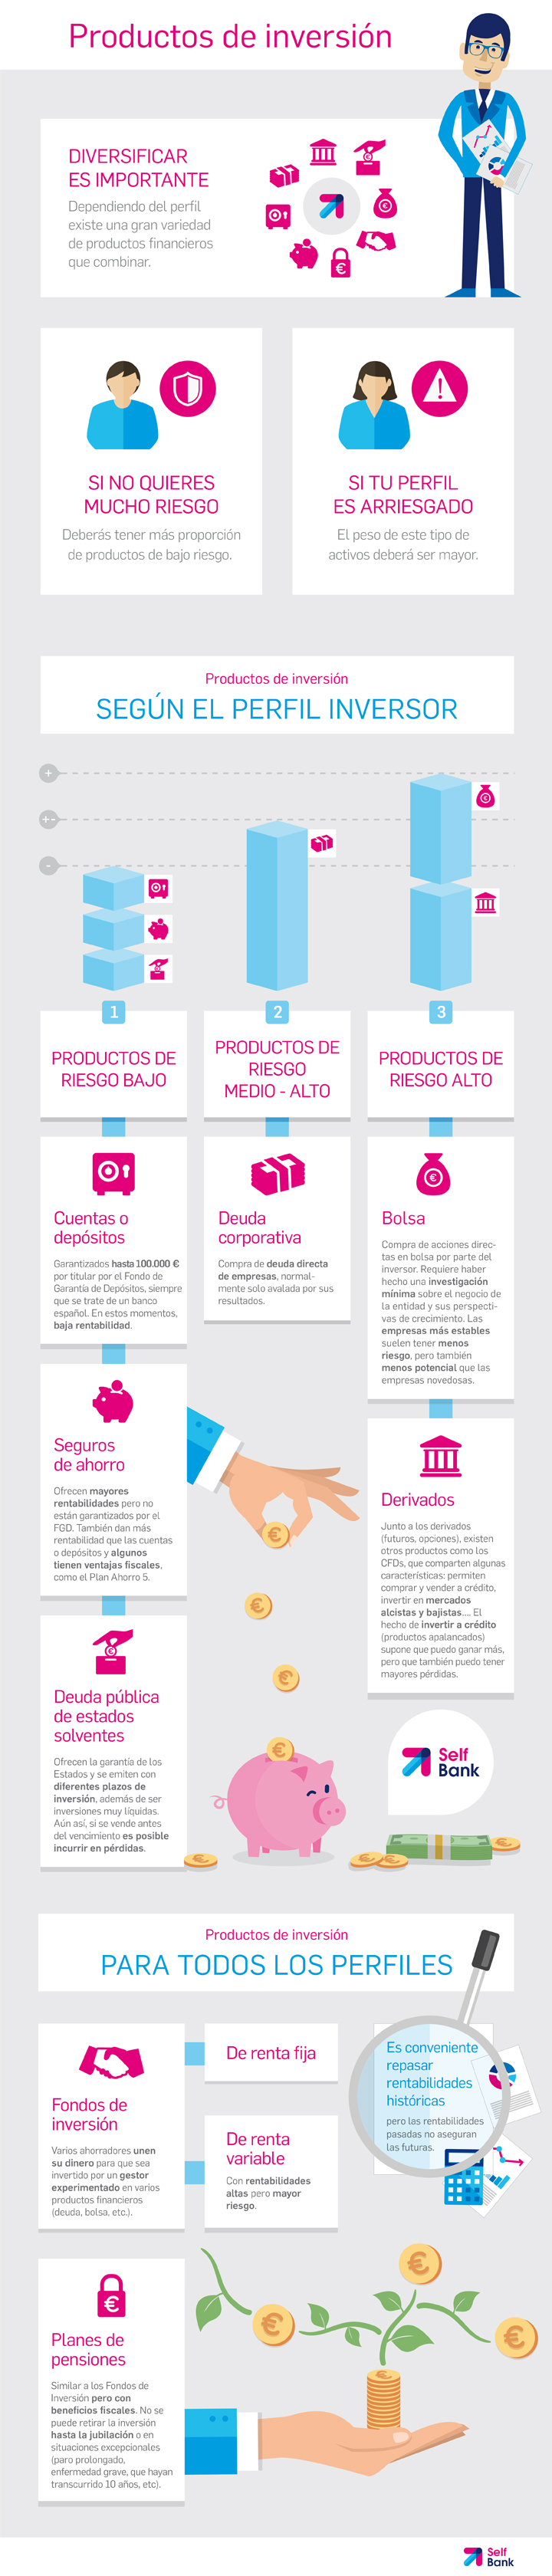 Infografía-selfbank productos-inversión